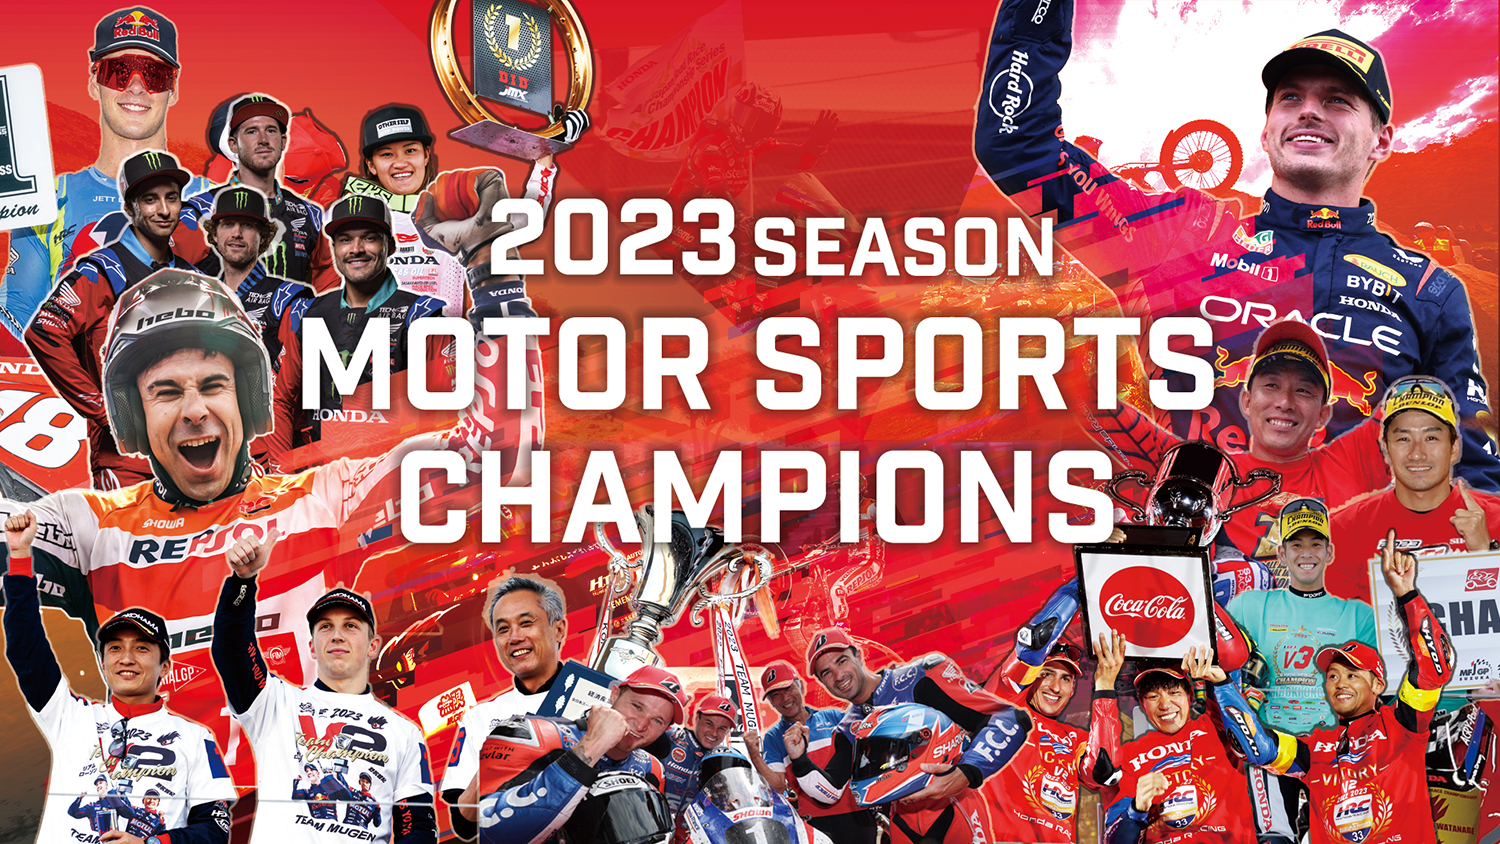 「Honda ウエルカムプラザ青山」にて「2023 SEASON MOTOR SPORTS CHAMPIONS」が開催中